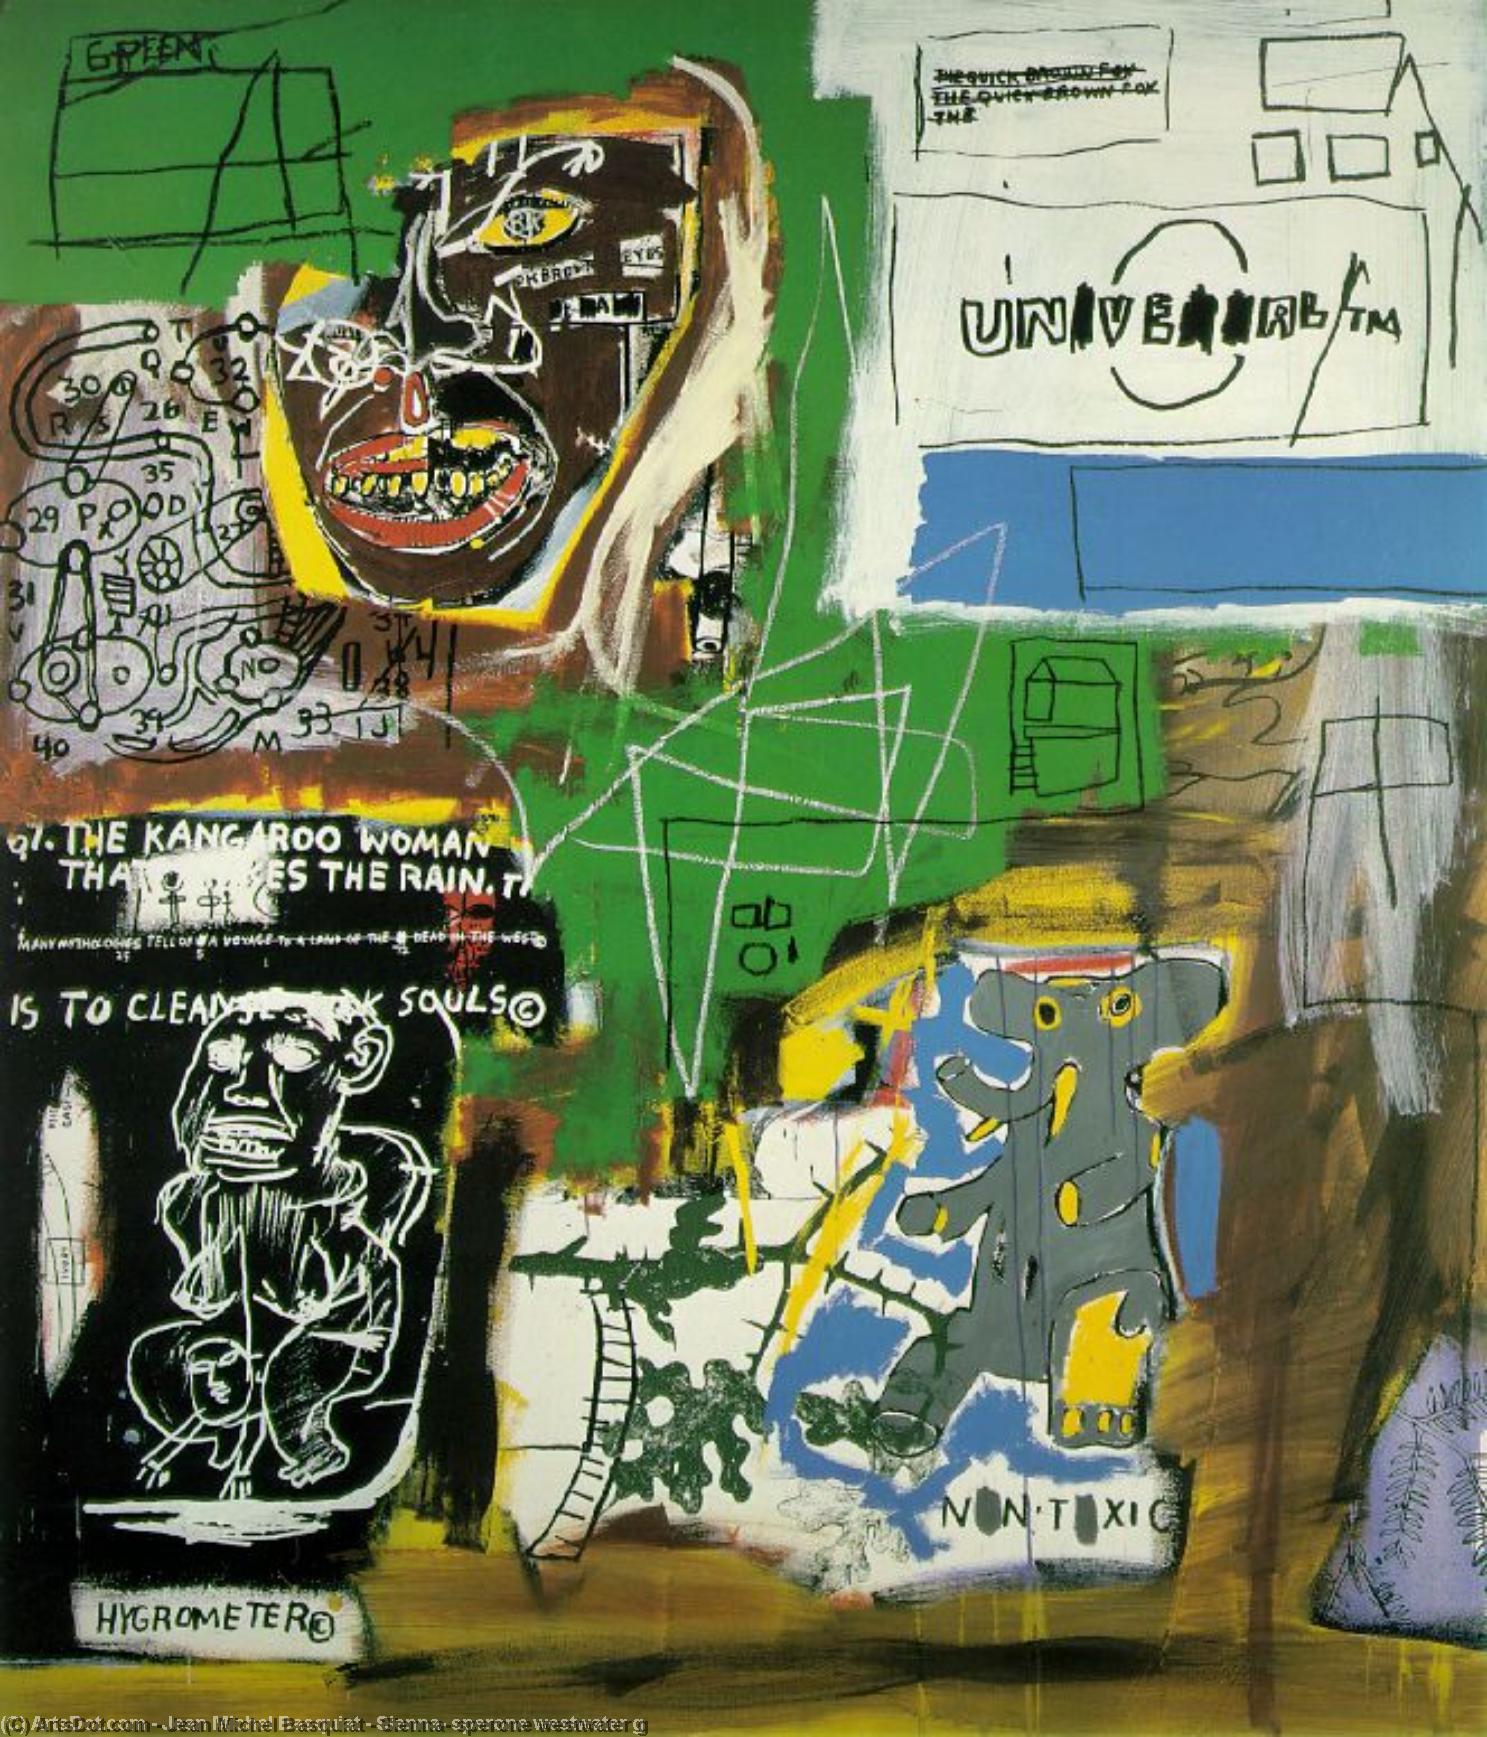 Wikoo.org - موسوعة الفنون الجميلة - اللوحة، العمل الفني Jean Michel Basquiat - Sienna, sperone westwater g